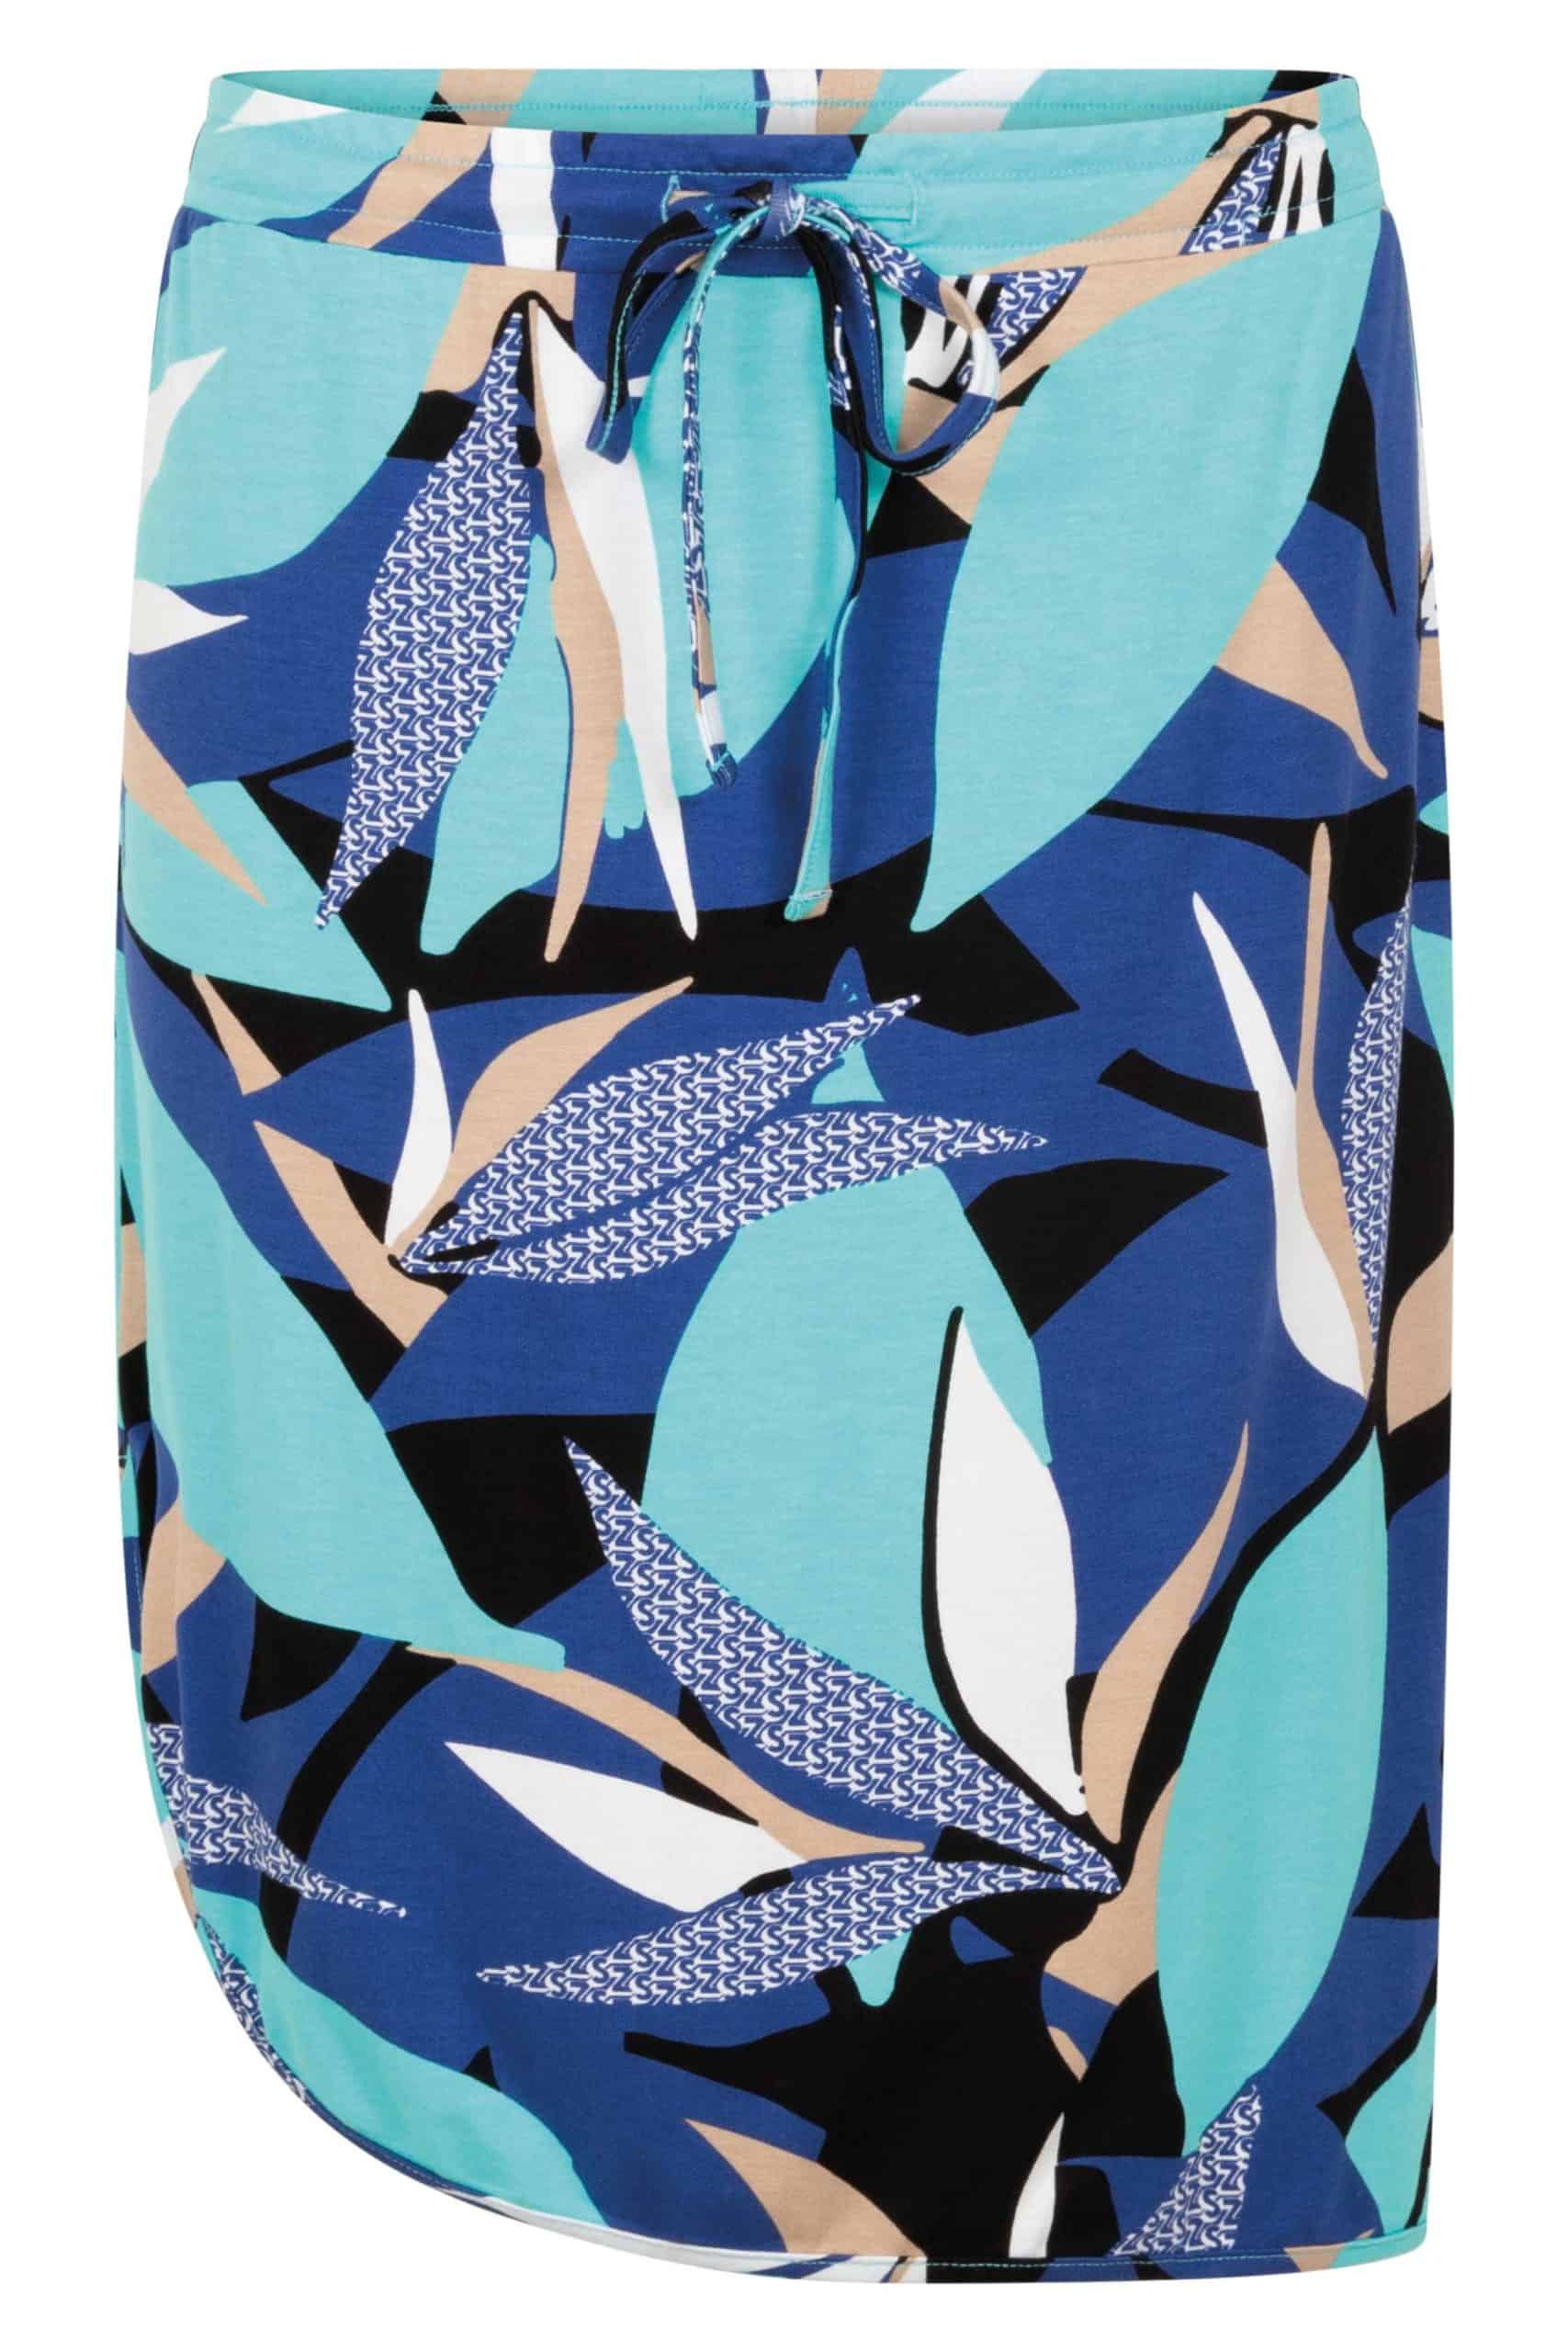 Zoso 223 Sunny Allover Printed Skirt Sea Blue